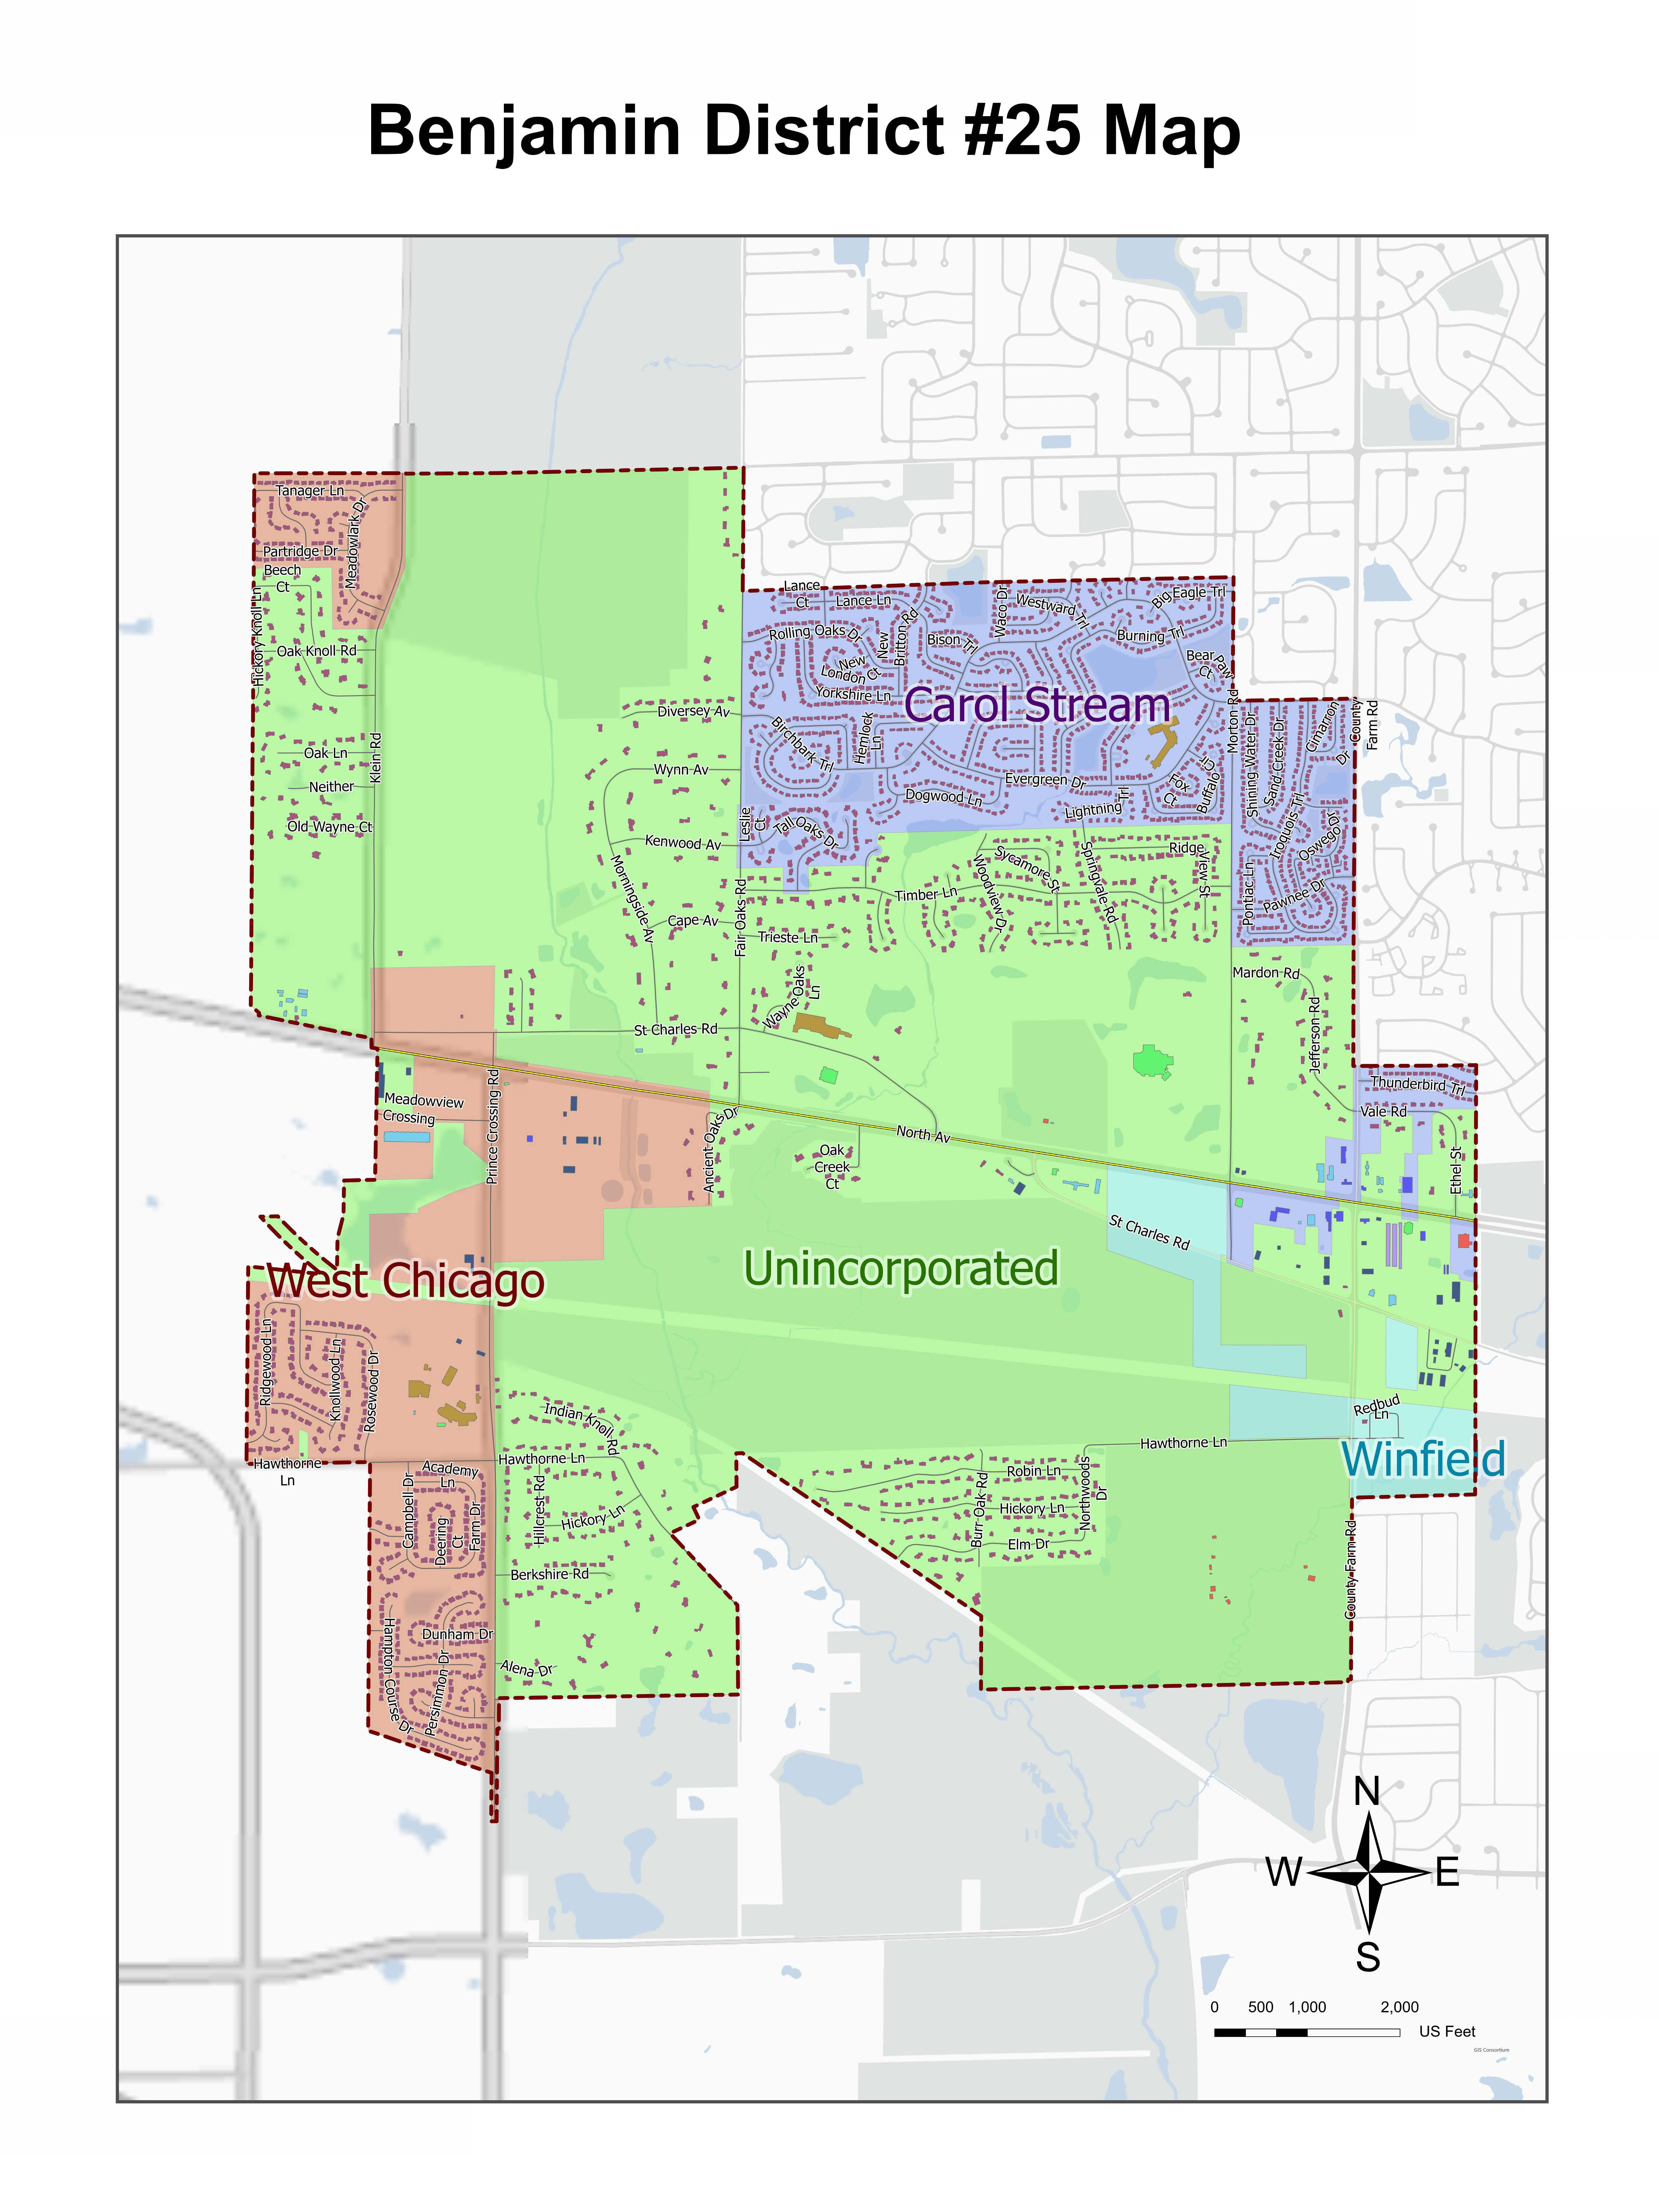 Benjamin District #25 district map